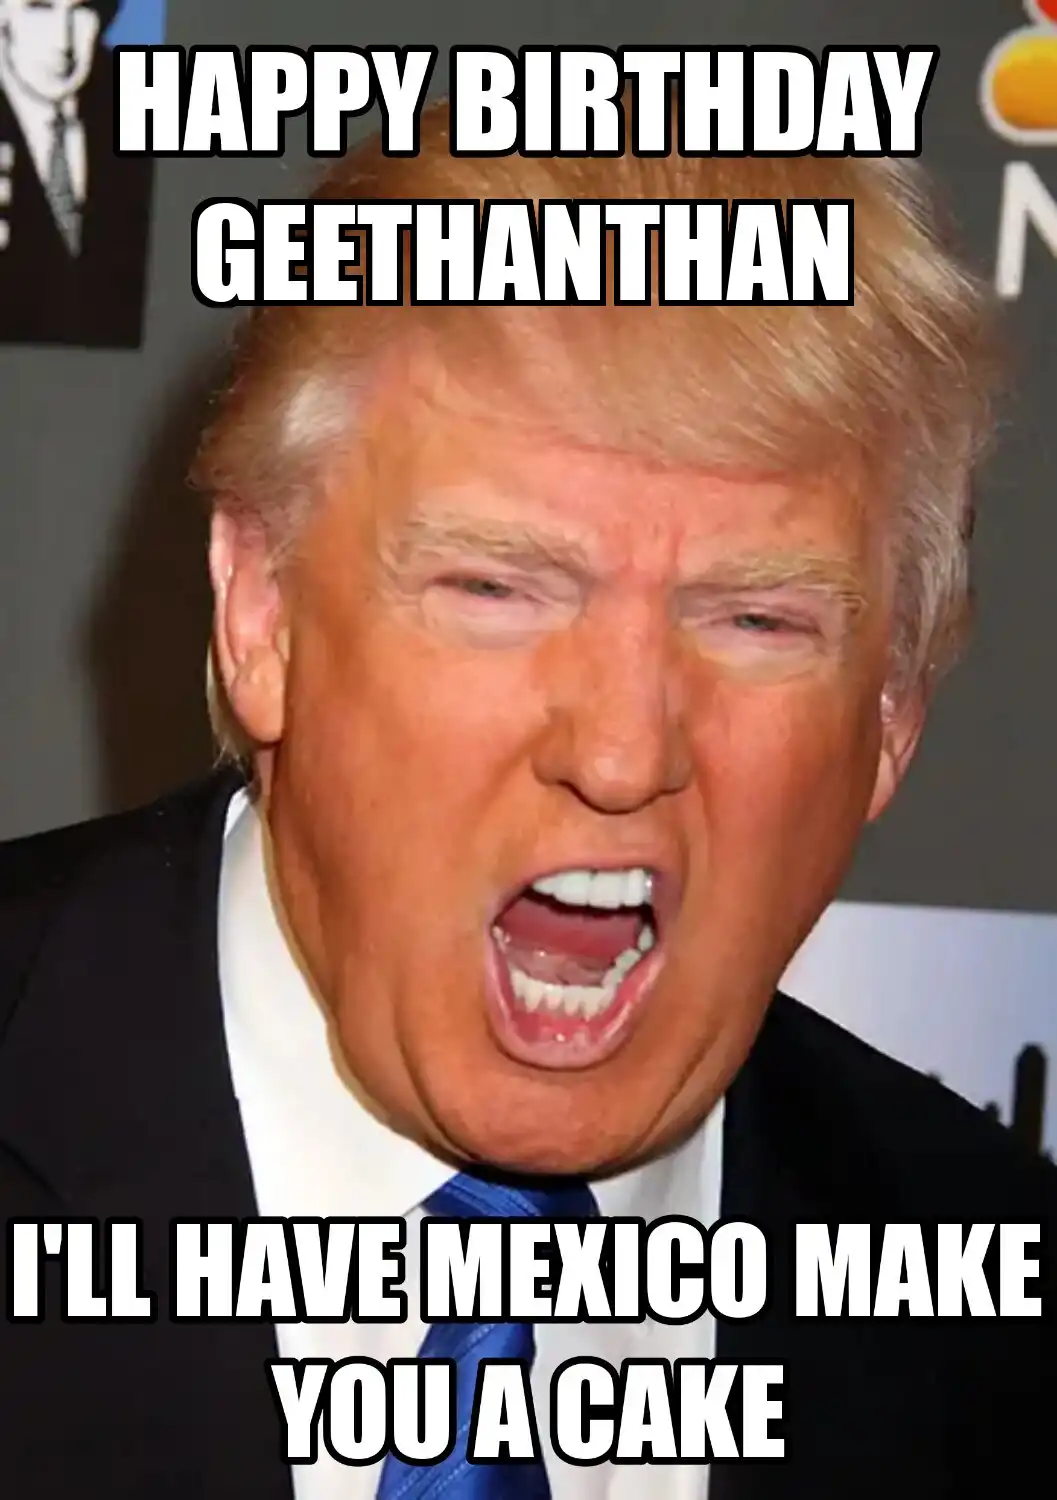 Happy Birthday Geethanthan Mexico Make You A Cake Meme